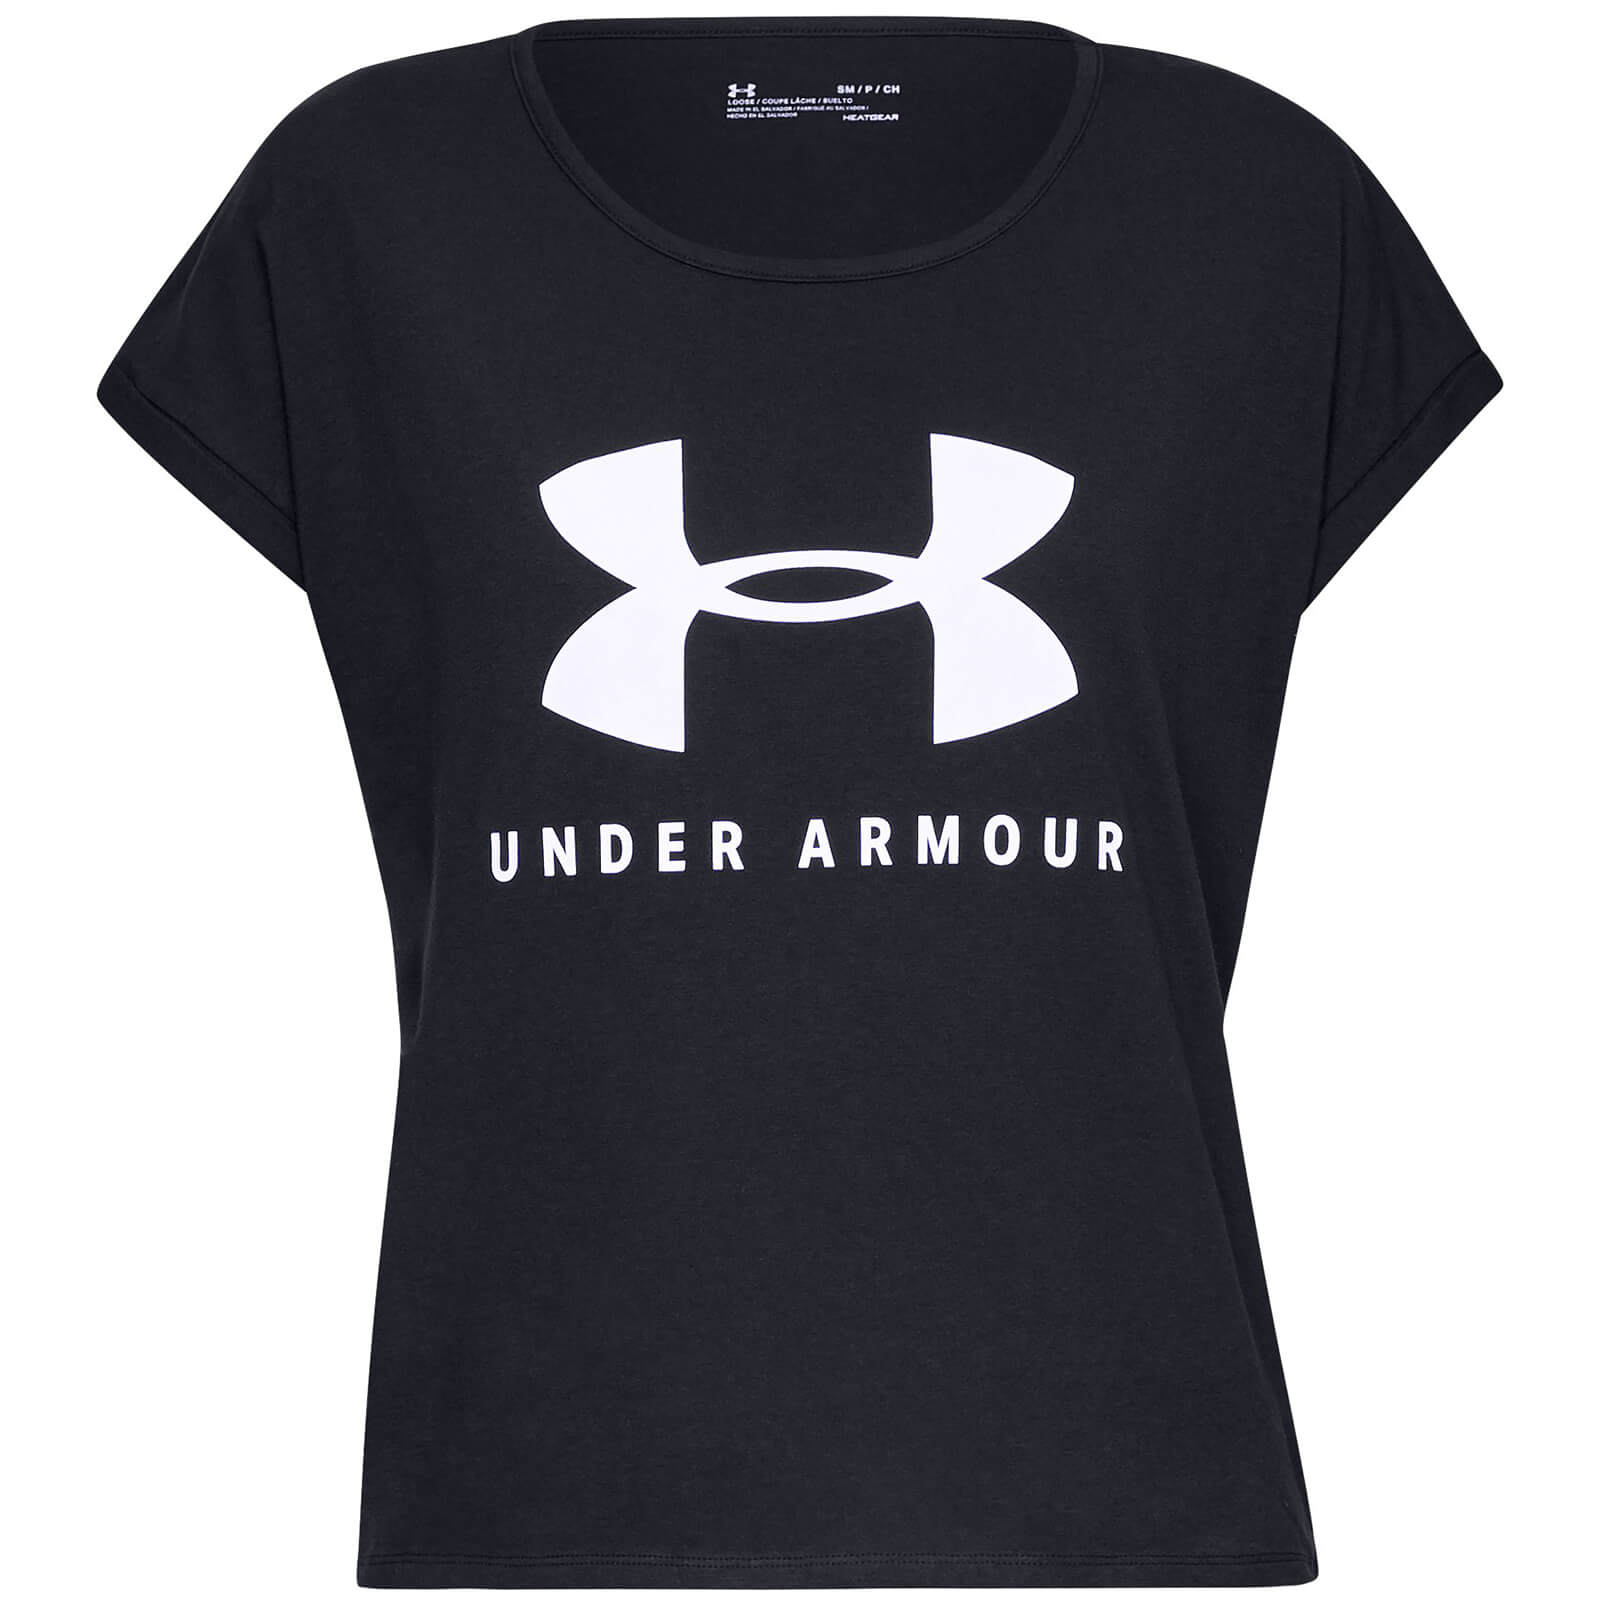 under armour women's shirts